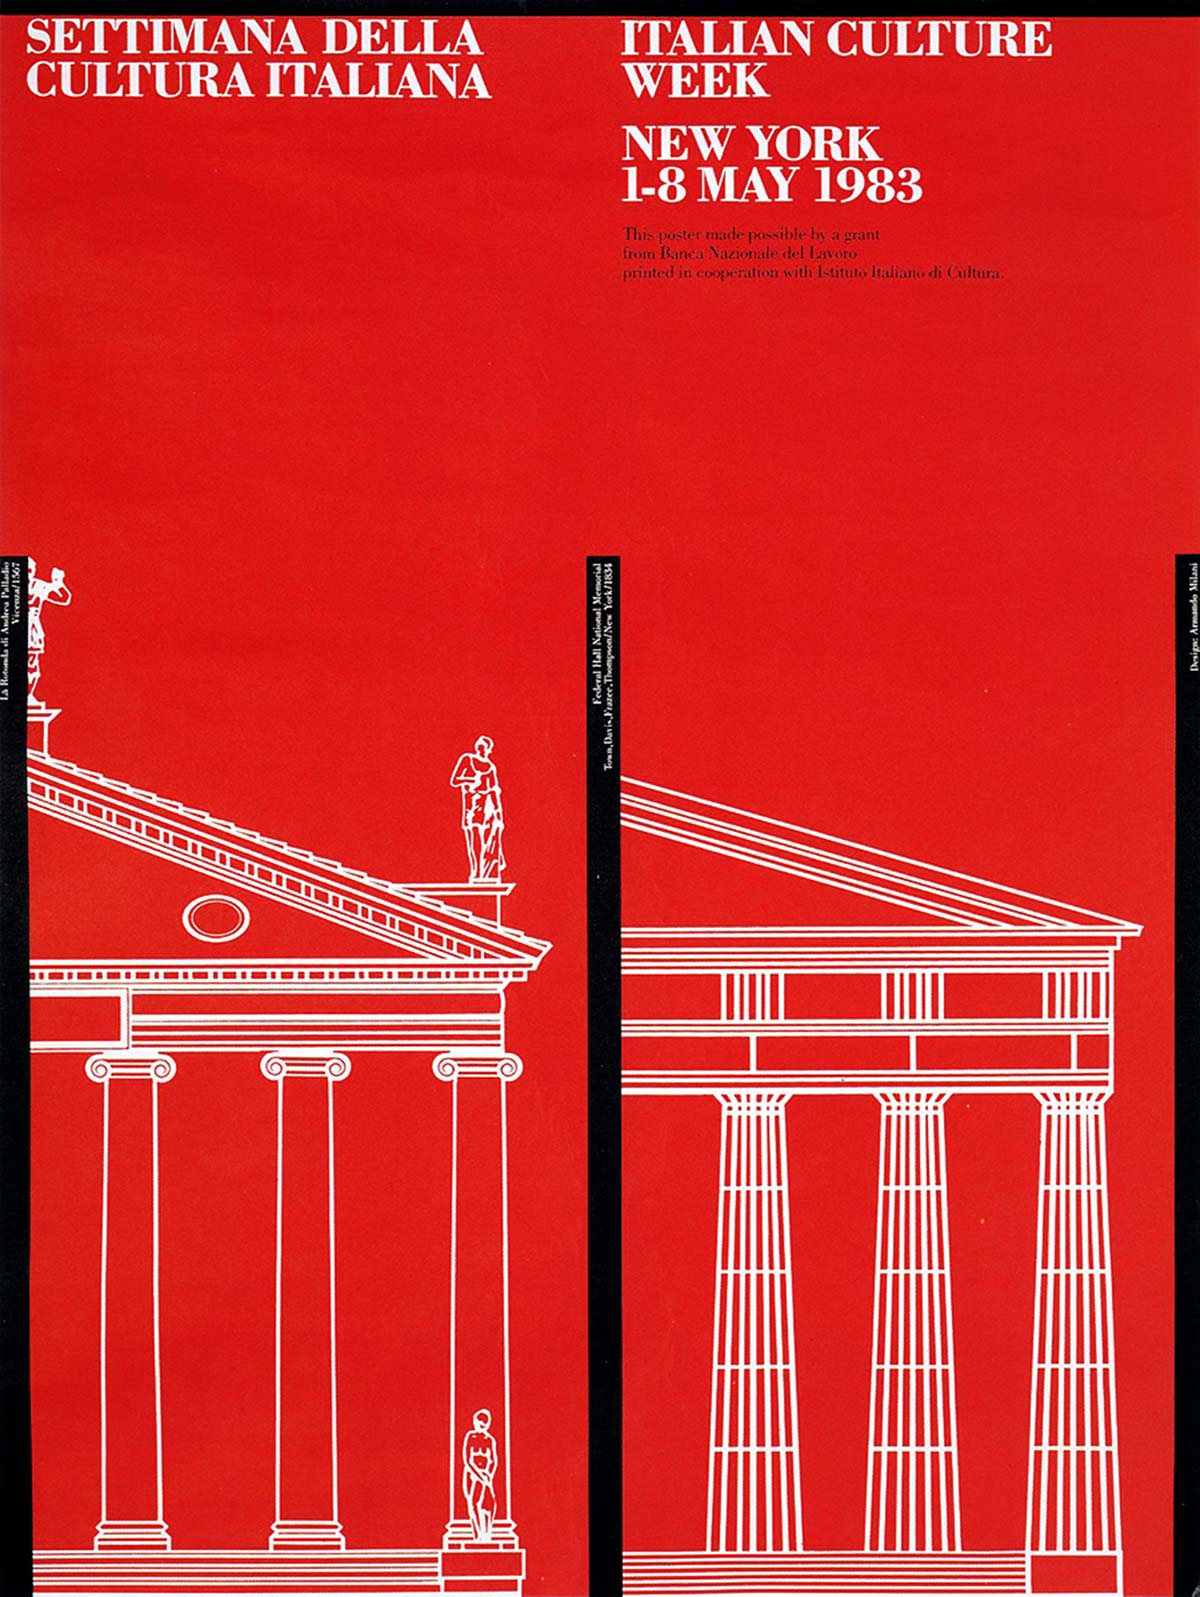 Italian Culture Week poster by Armando Milani, 1983